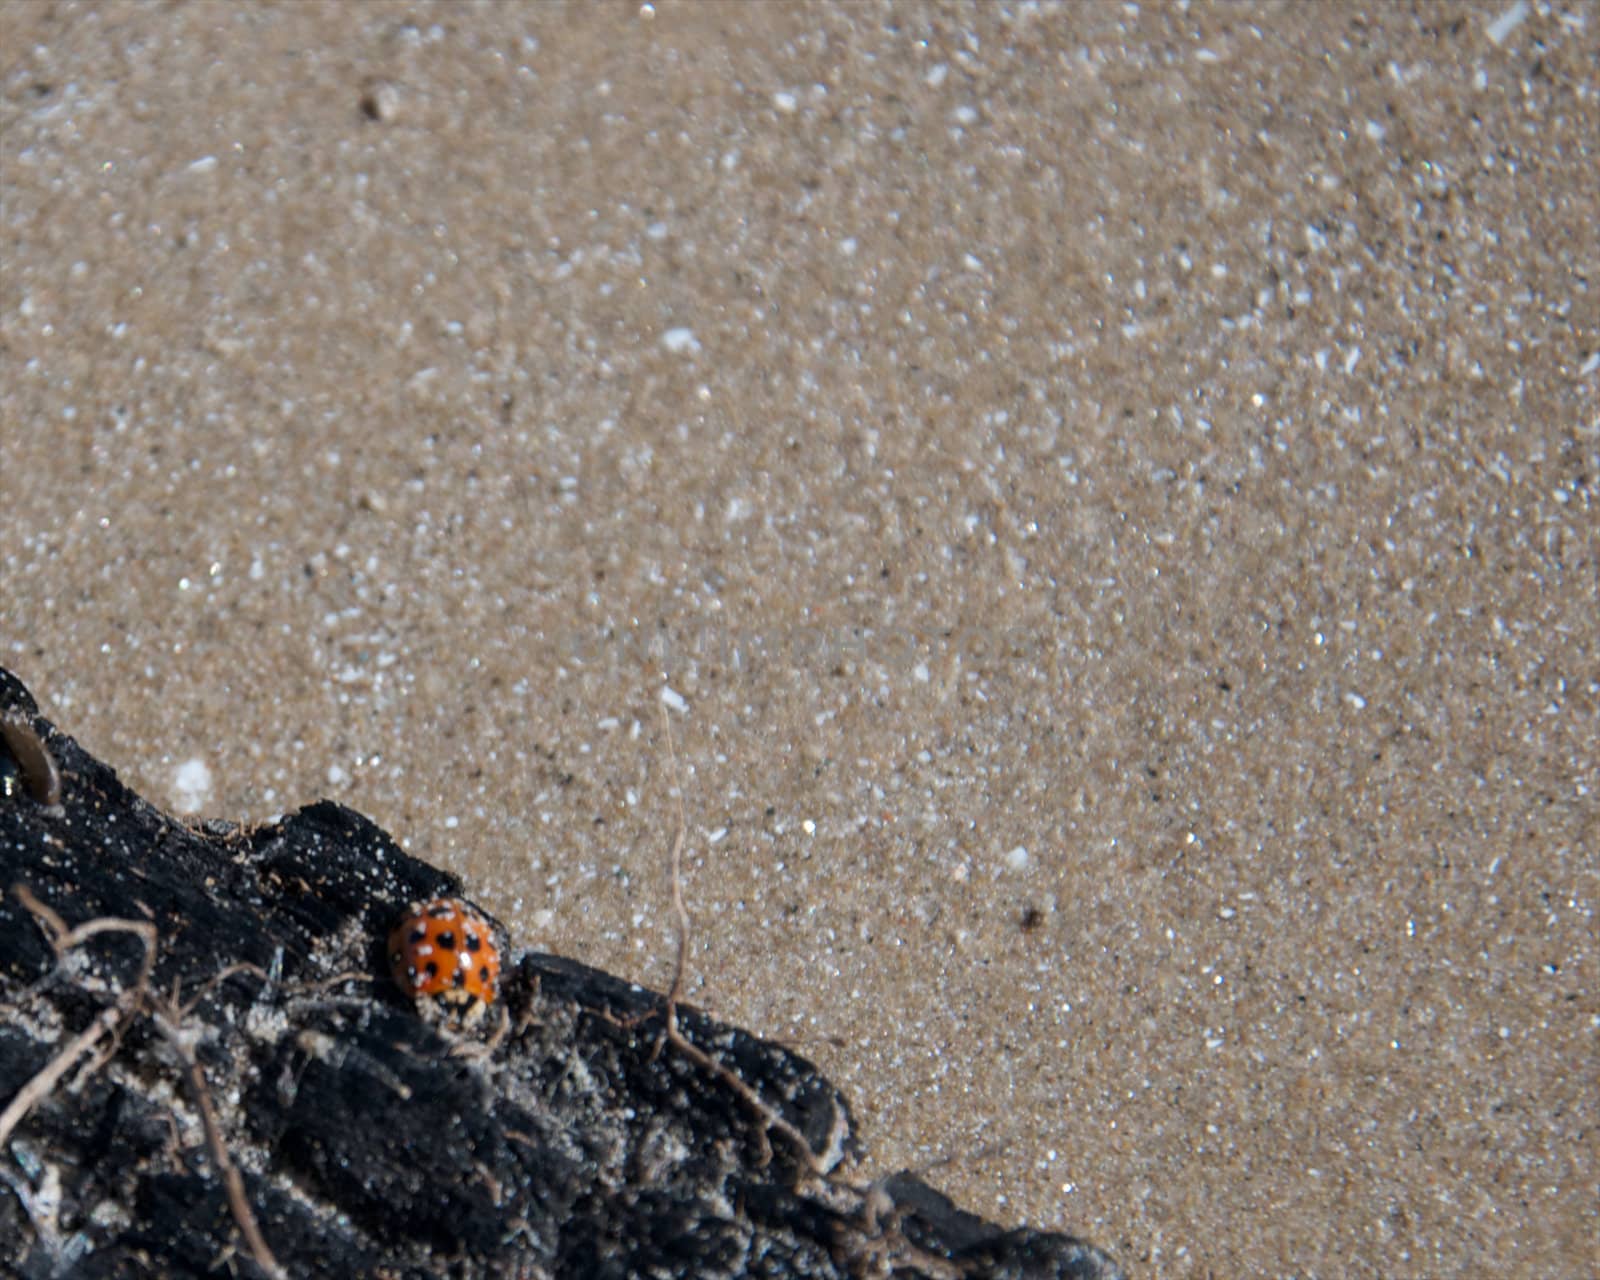 Lady bug and beach sand by tyroneburkemedia@gmail.com